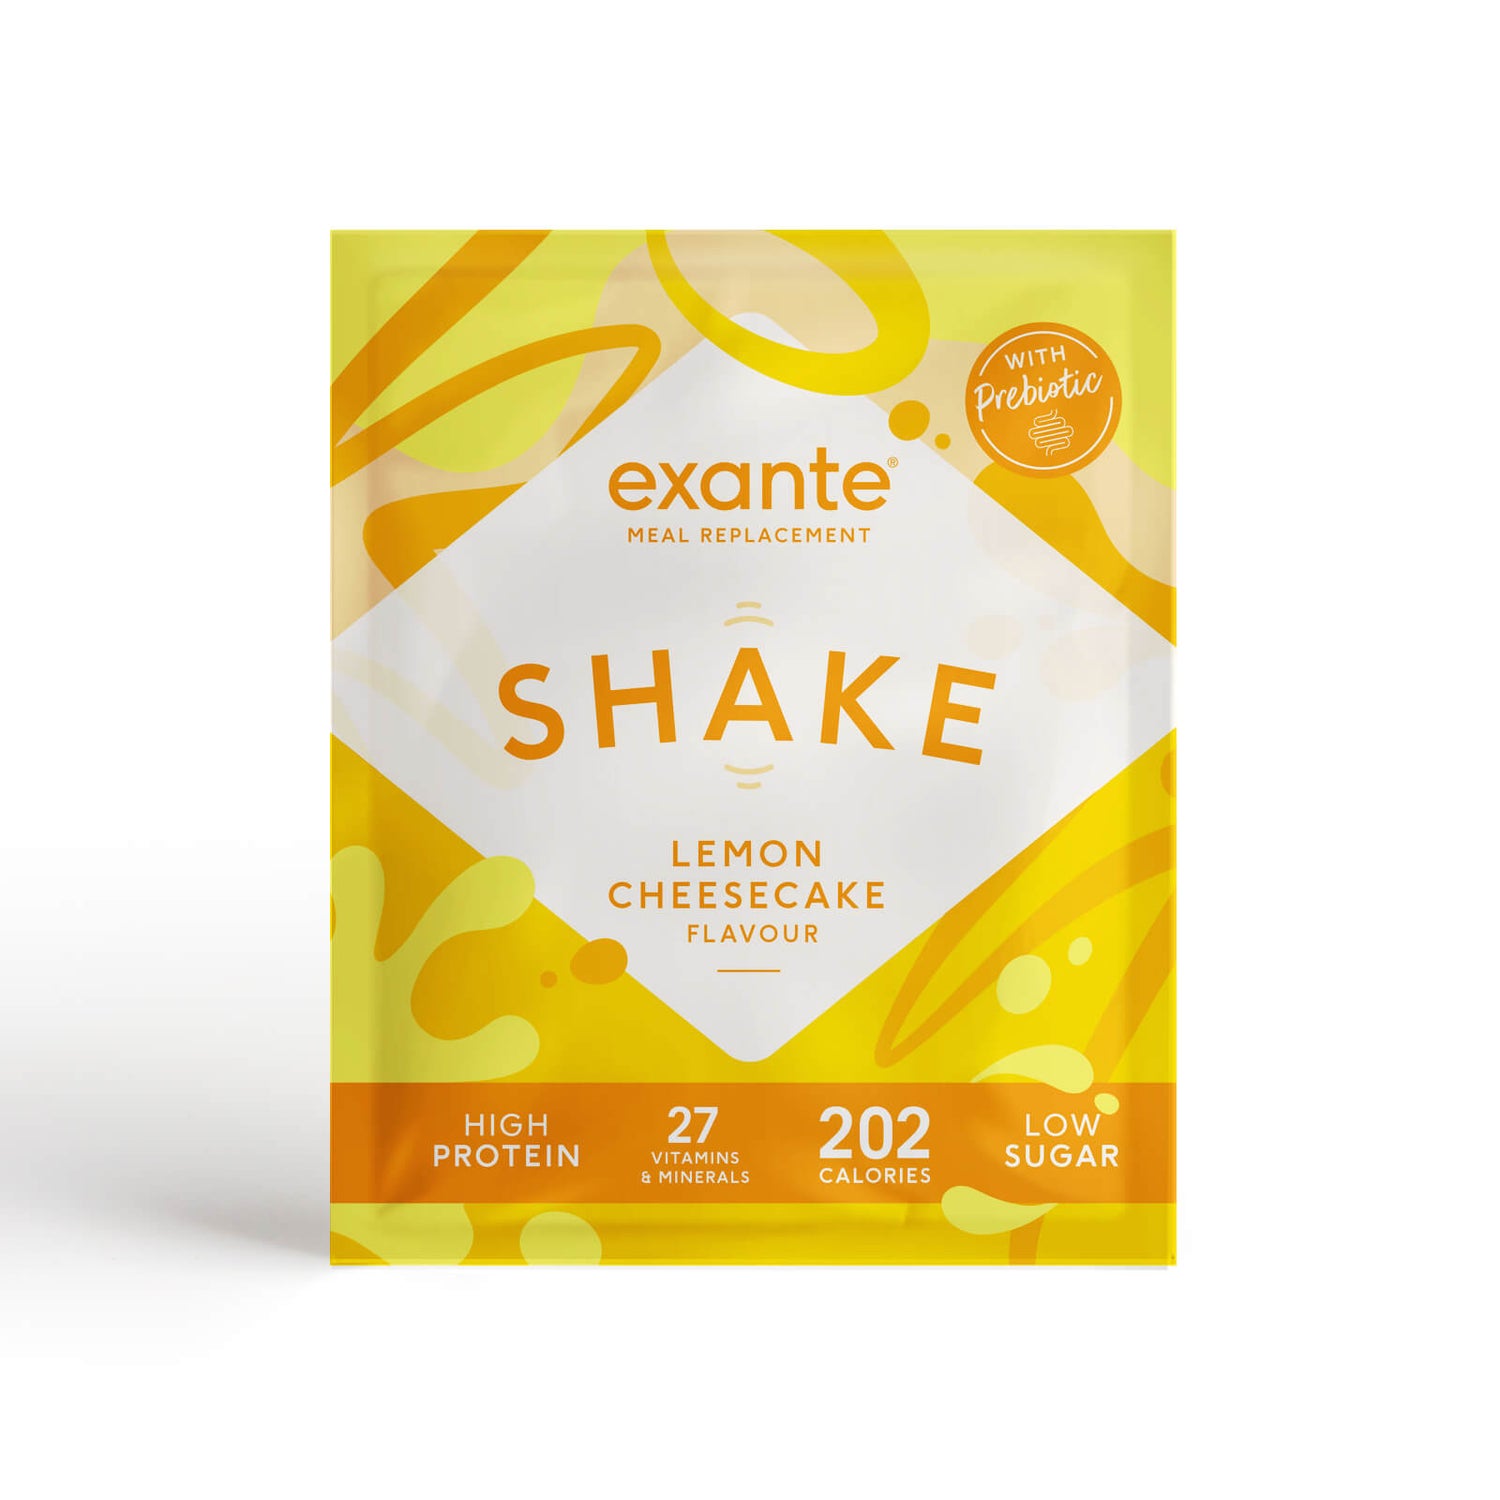 Exante Diet Meal Replacement Shake, Lemon Cheesecake, Single Serving Sachet